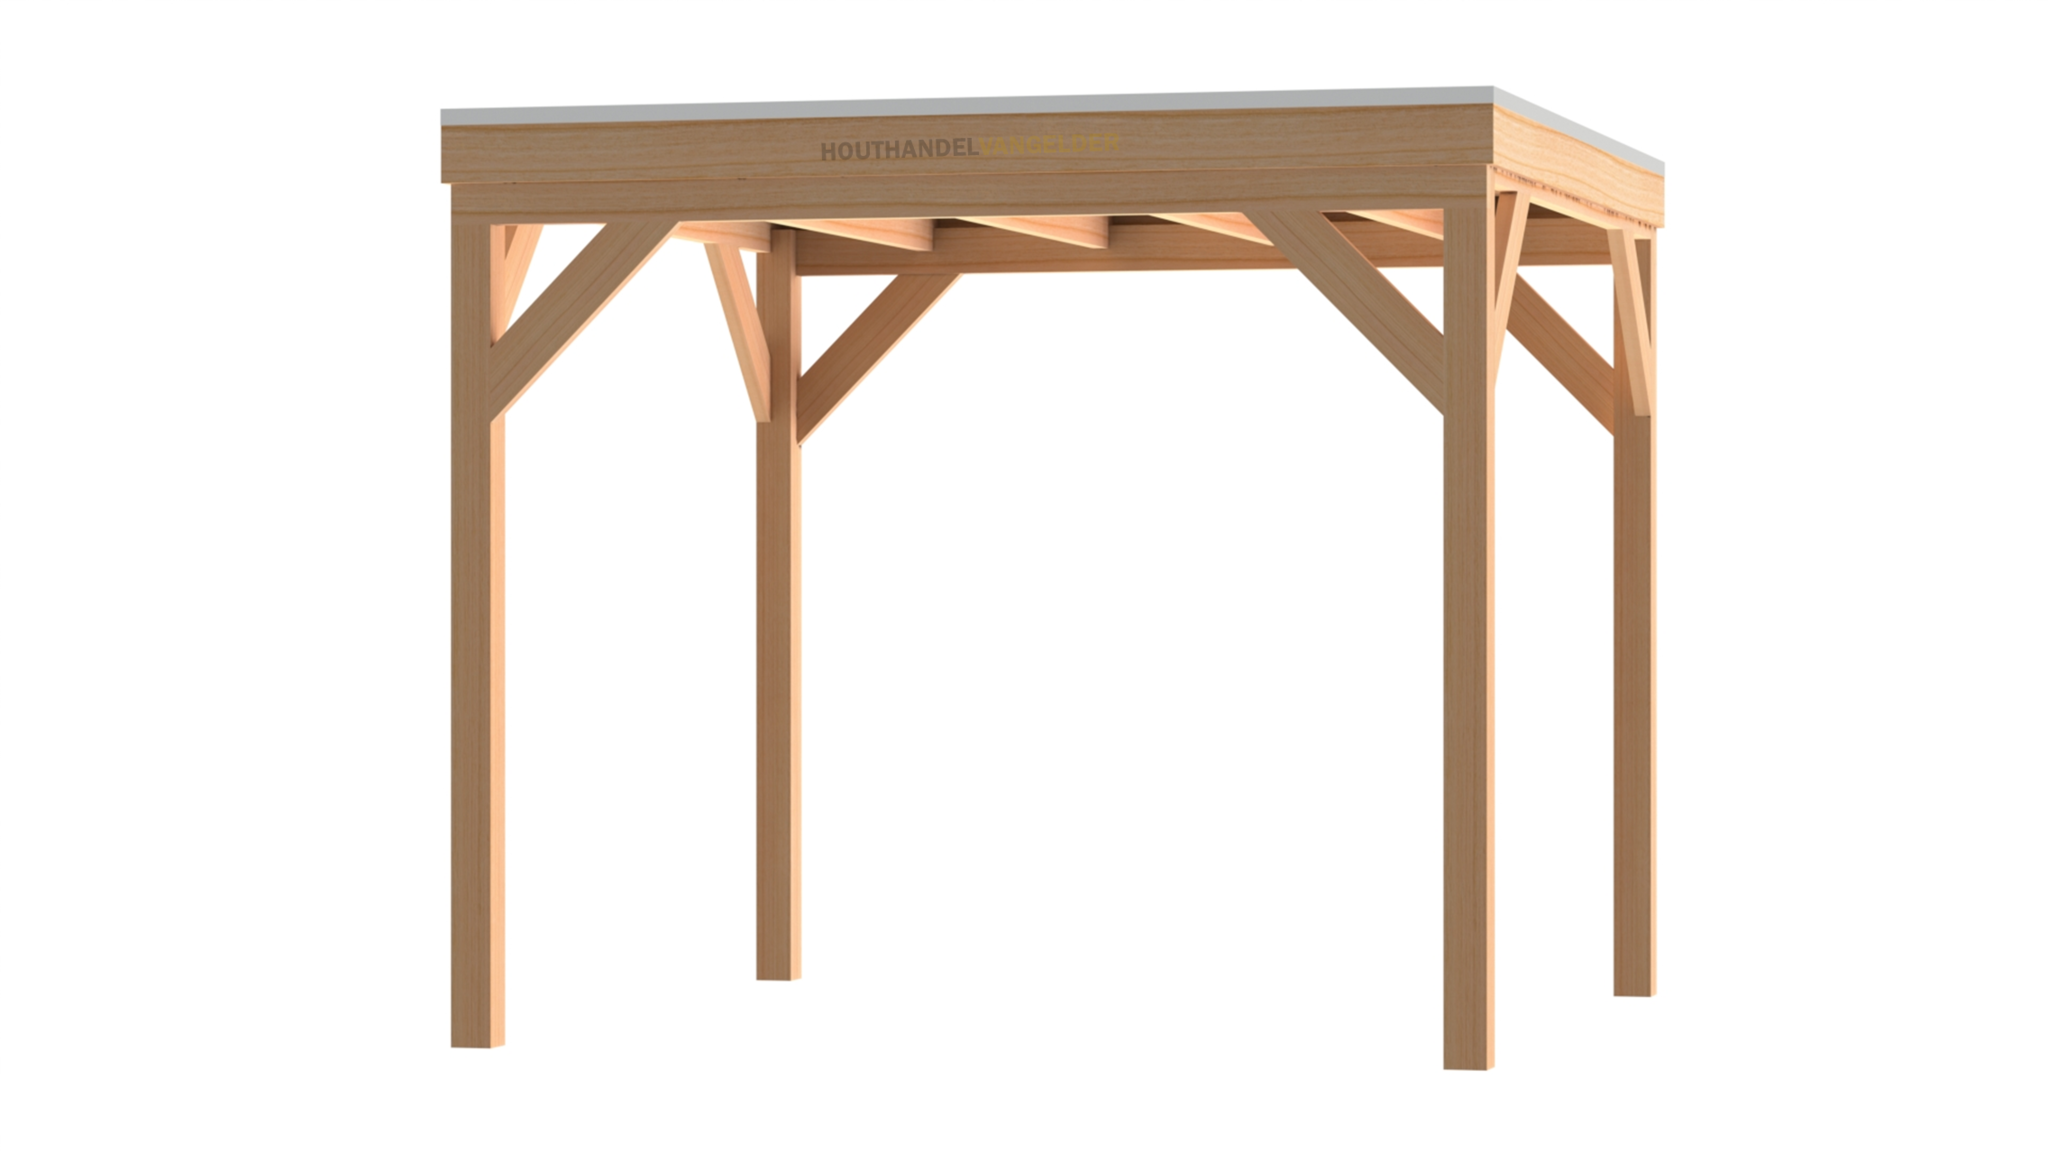 Douglas houten overkapping Basic met plat dak